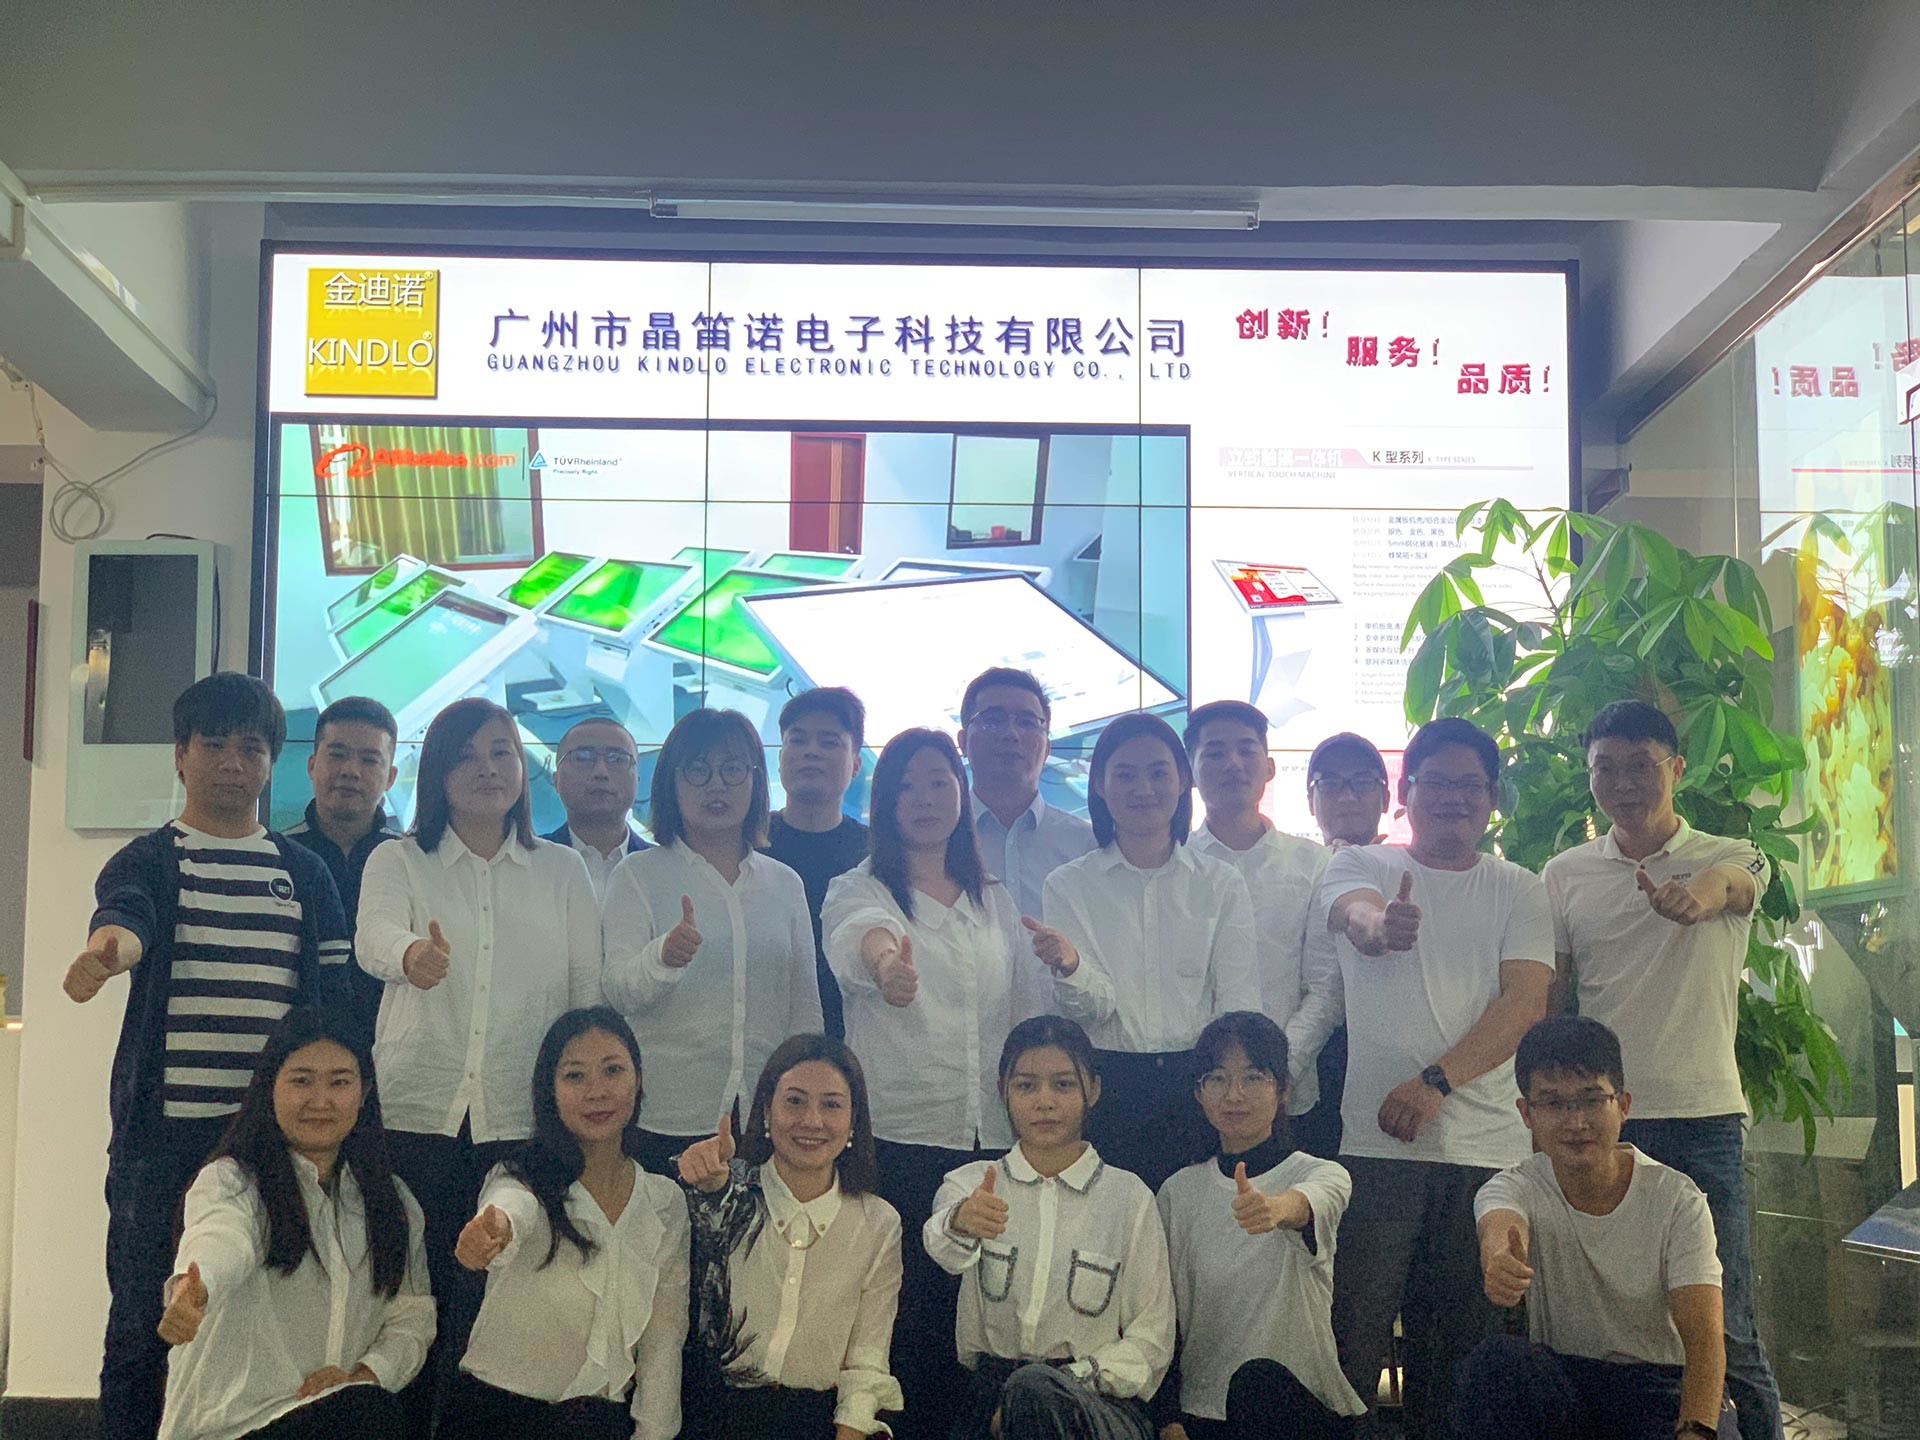 China Guangzhou Jingdinuo Electronic Technology Co., Ltd.